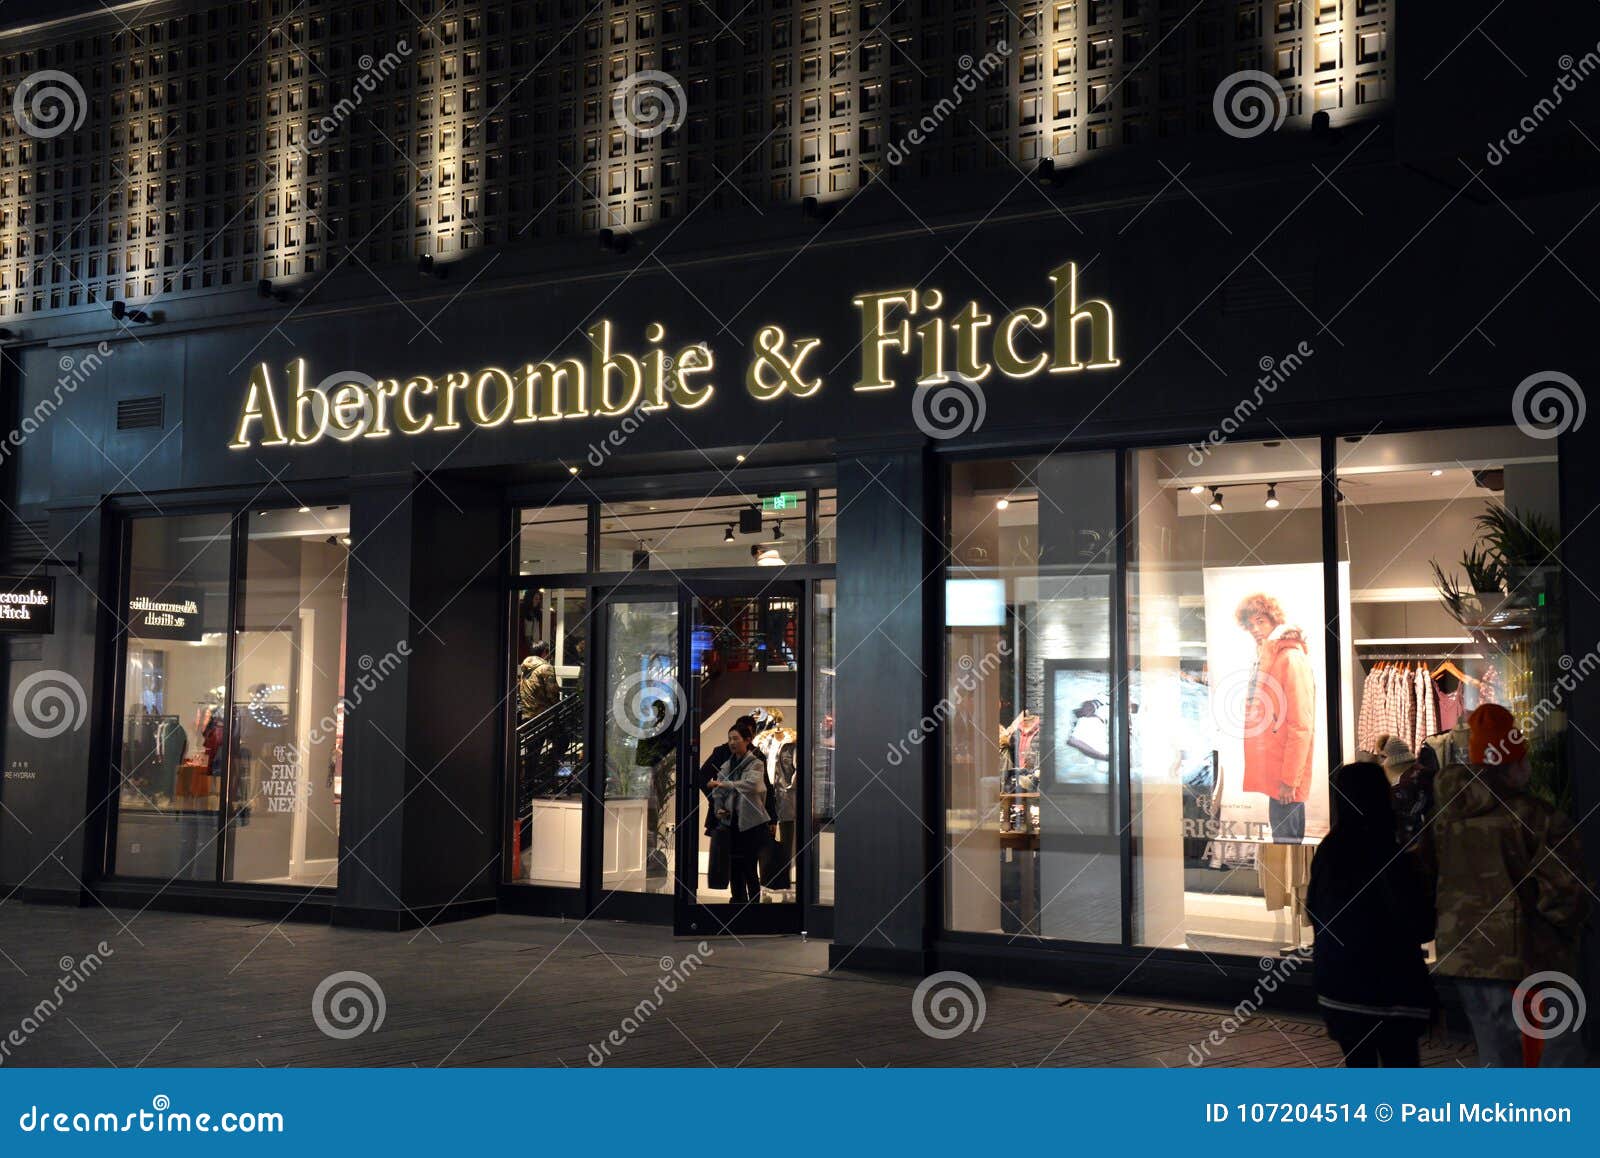 abercrombie fitch shop